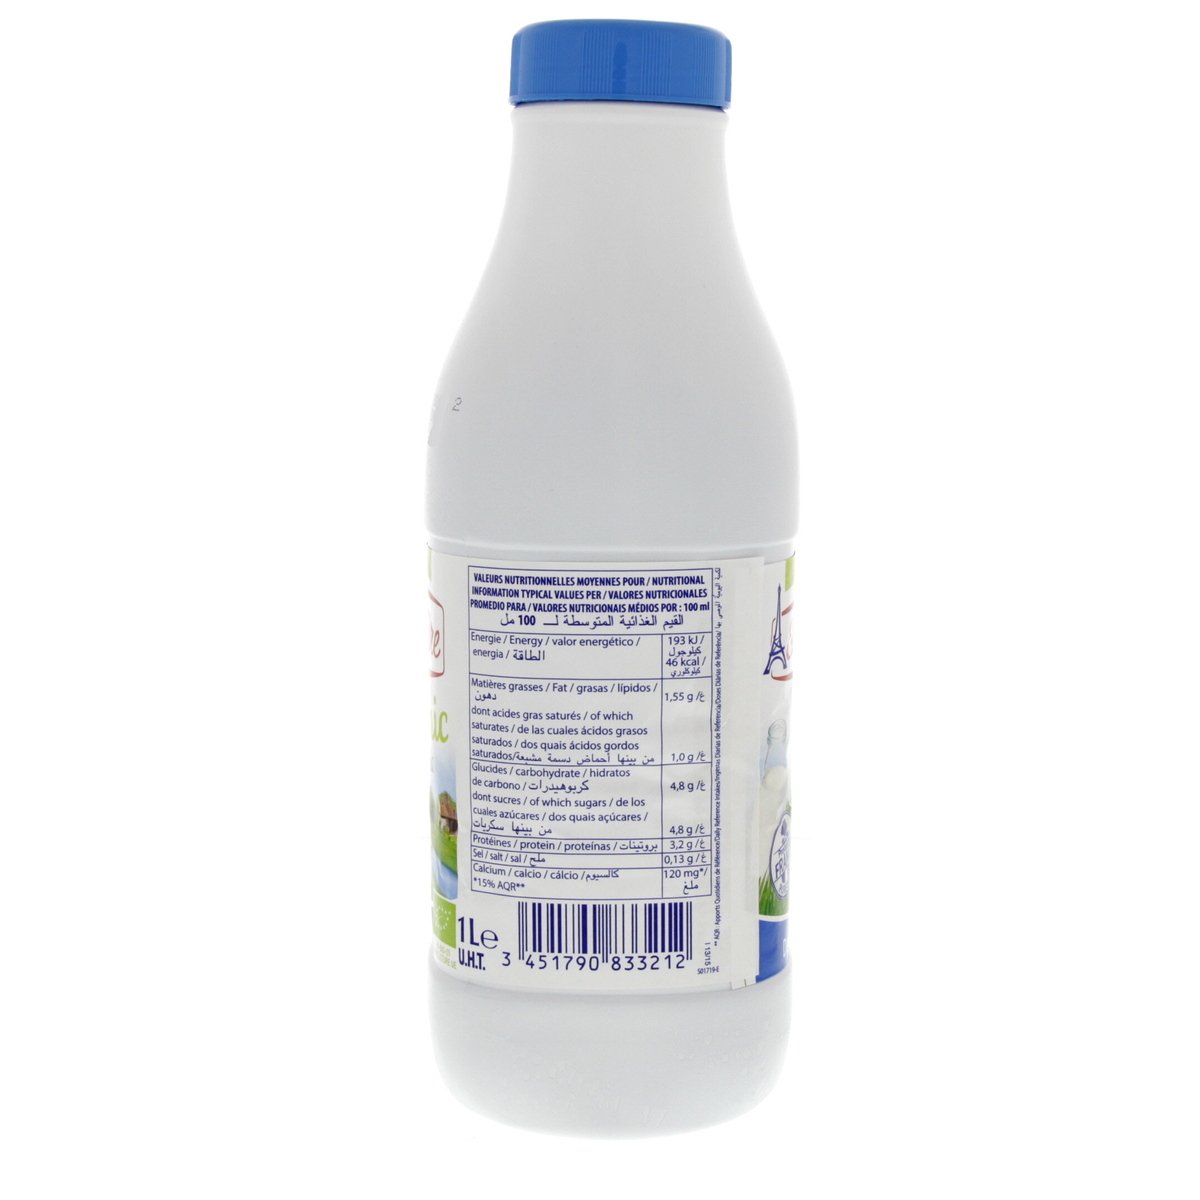 Elle And Vire Organic Milk Semi Skimmed 1 Litre